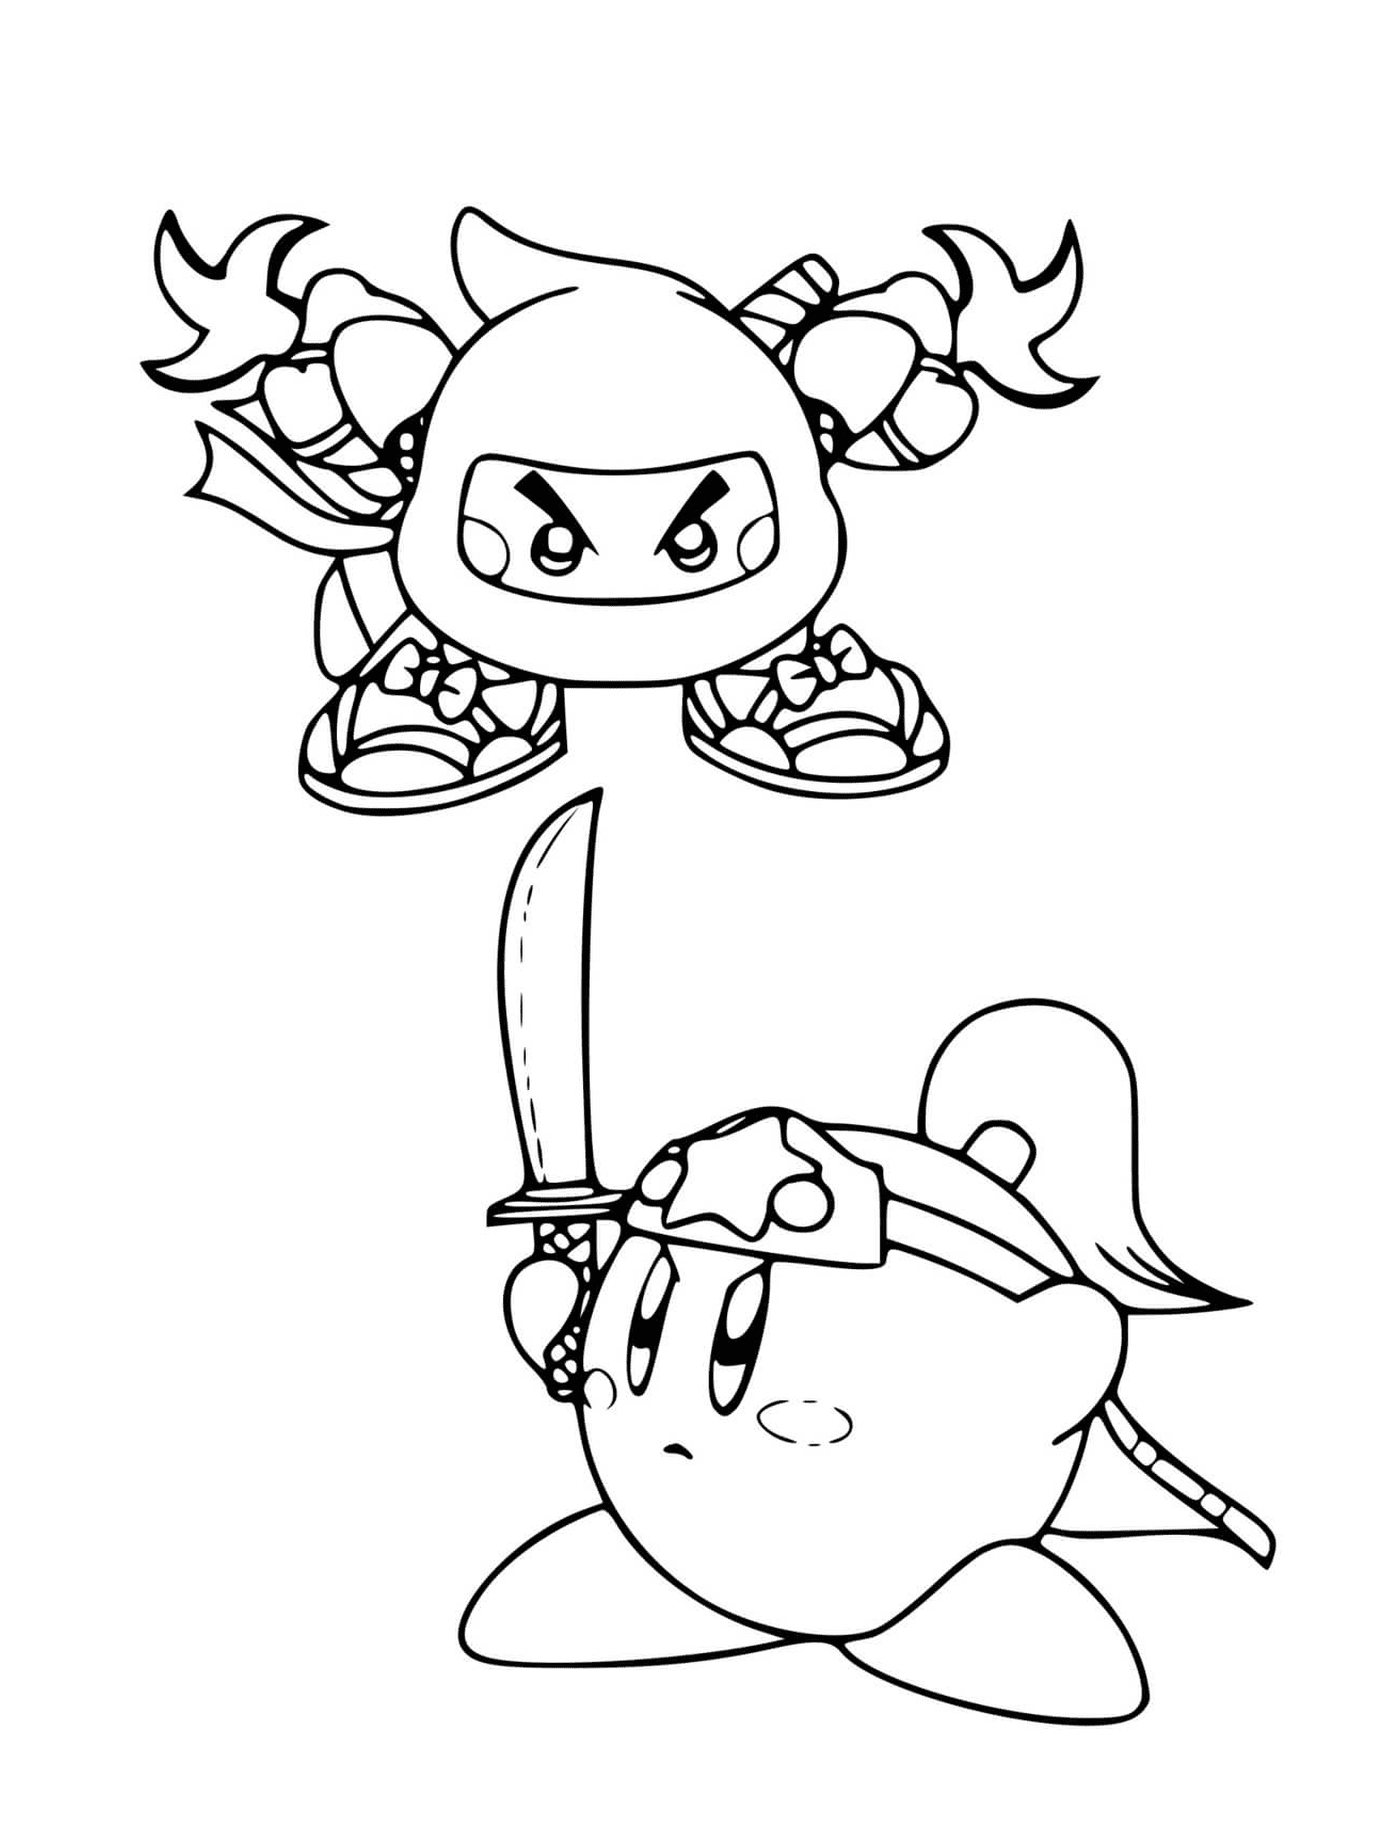  Super Kirby choque con espada 